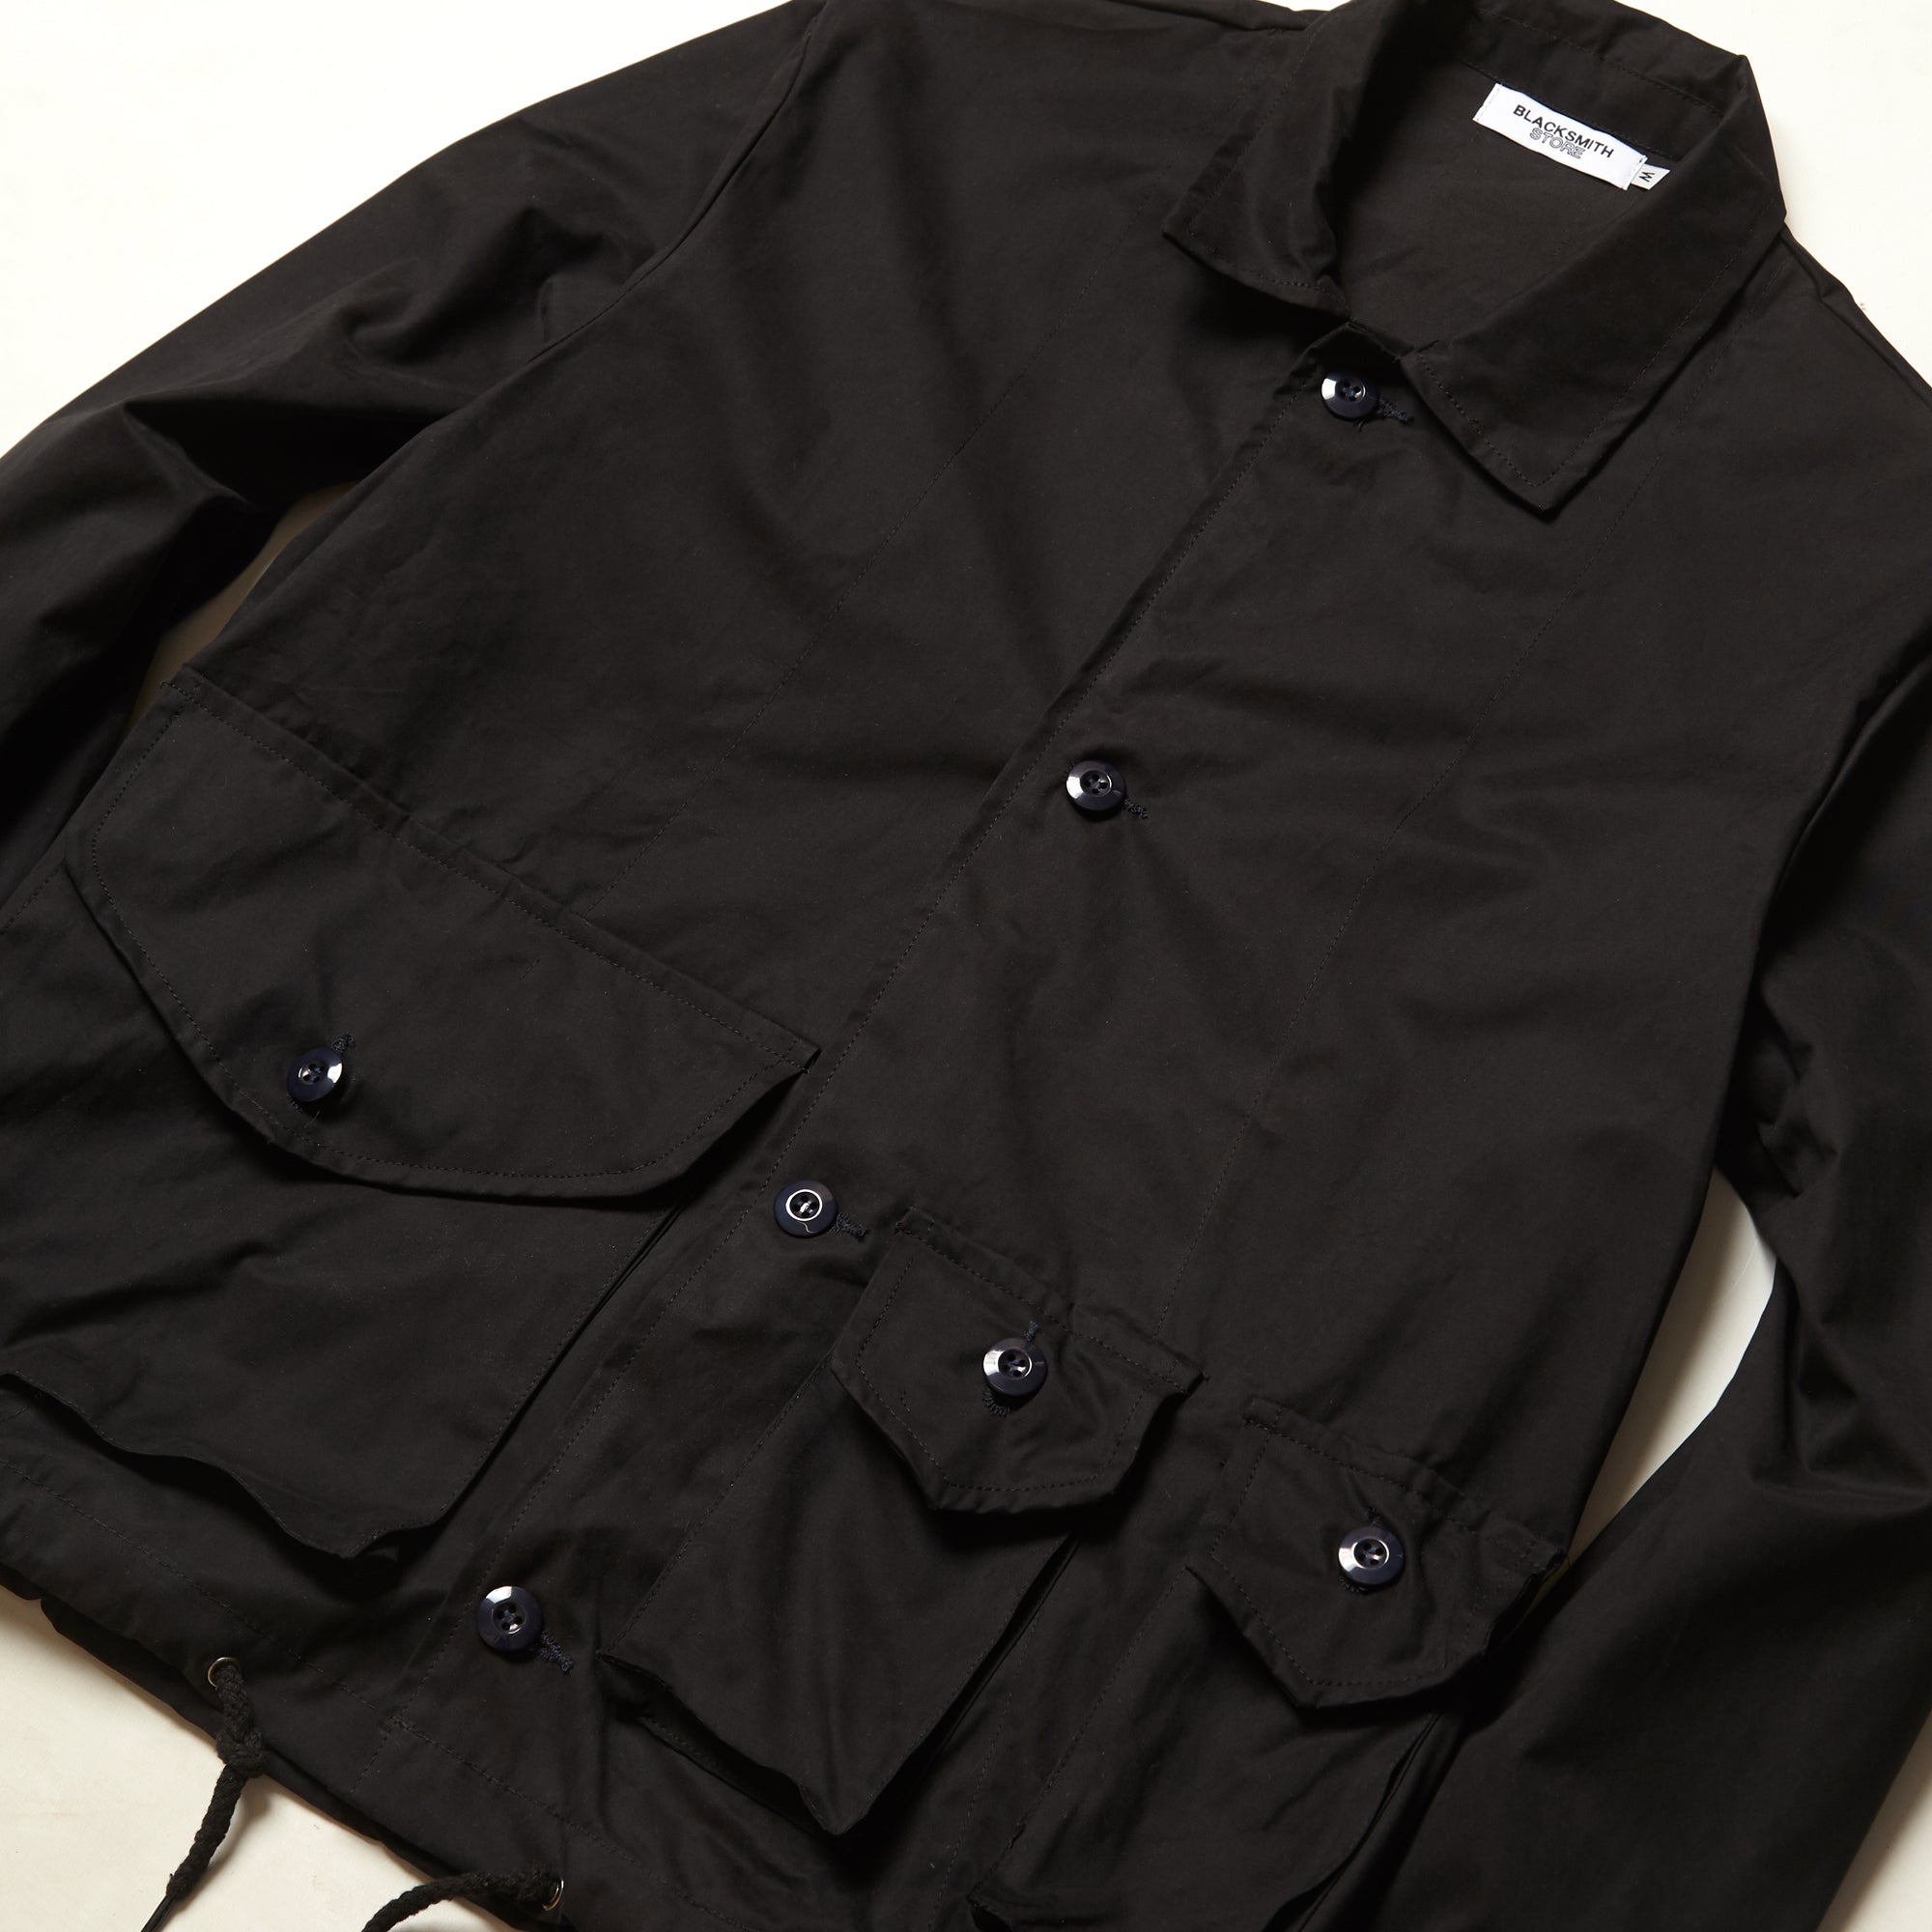 Blacksmith - Service Blouson Jacket - Black